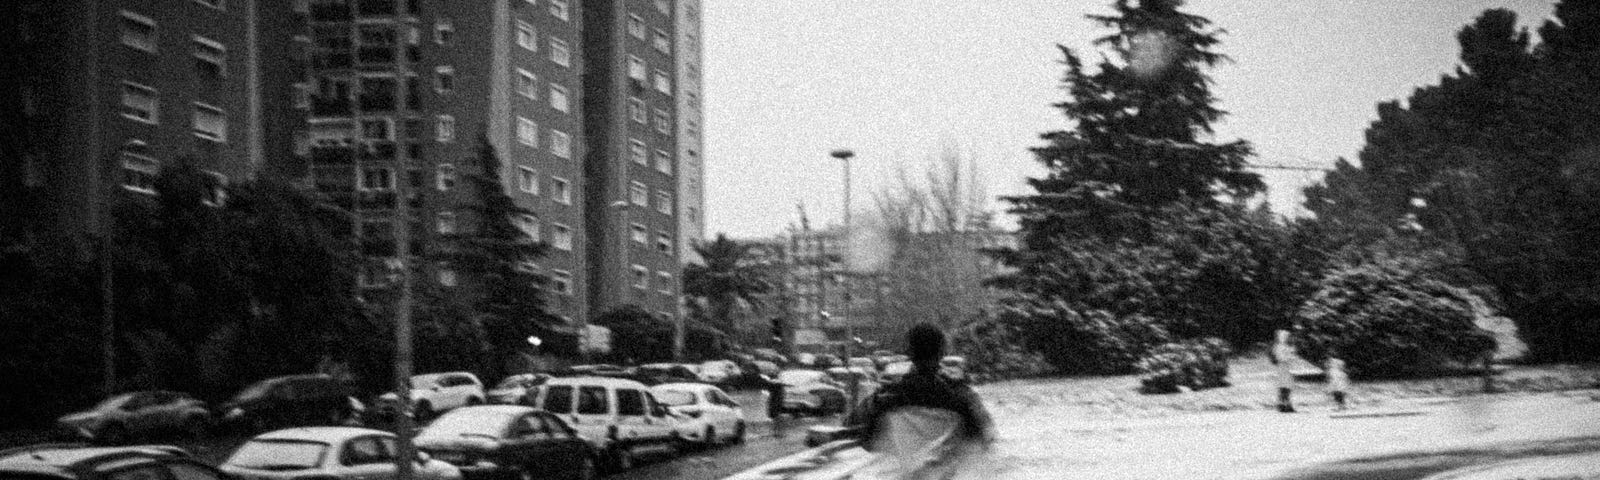 Teen boy in shorts running away from camera, down inner city street.